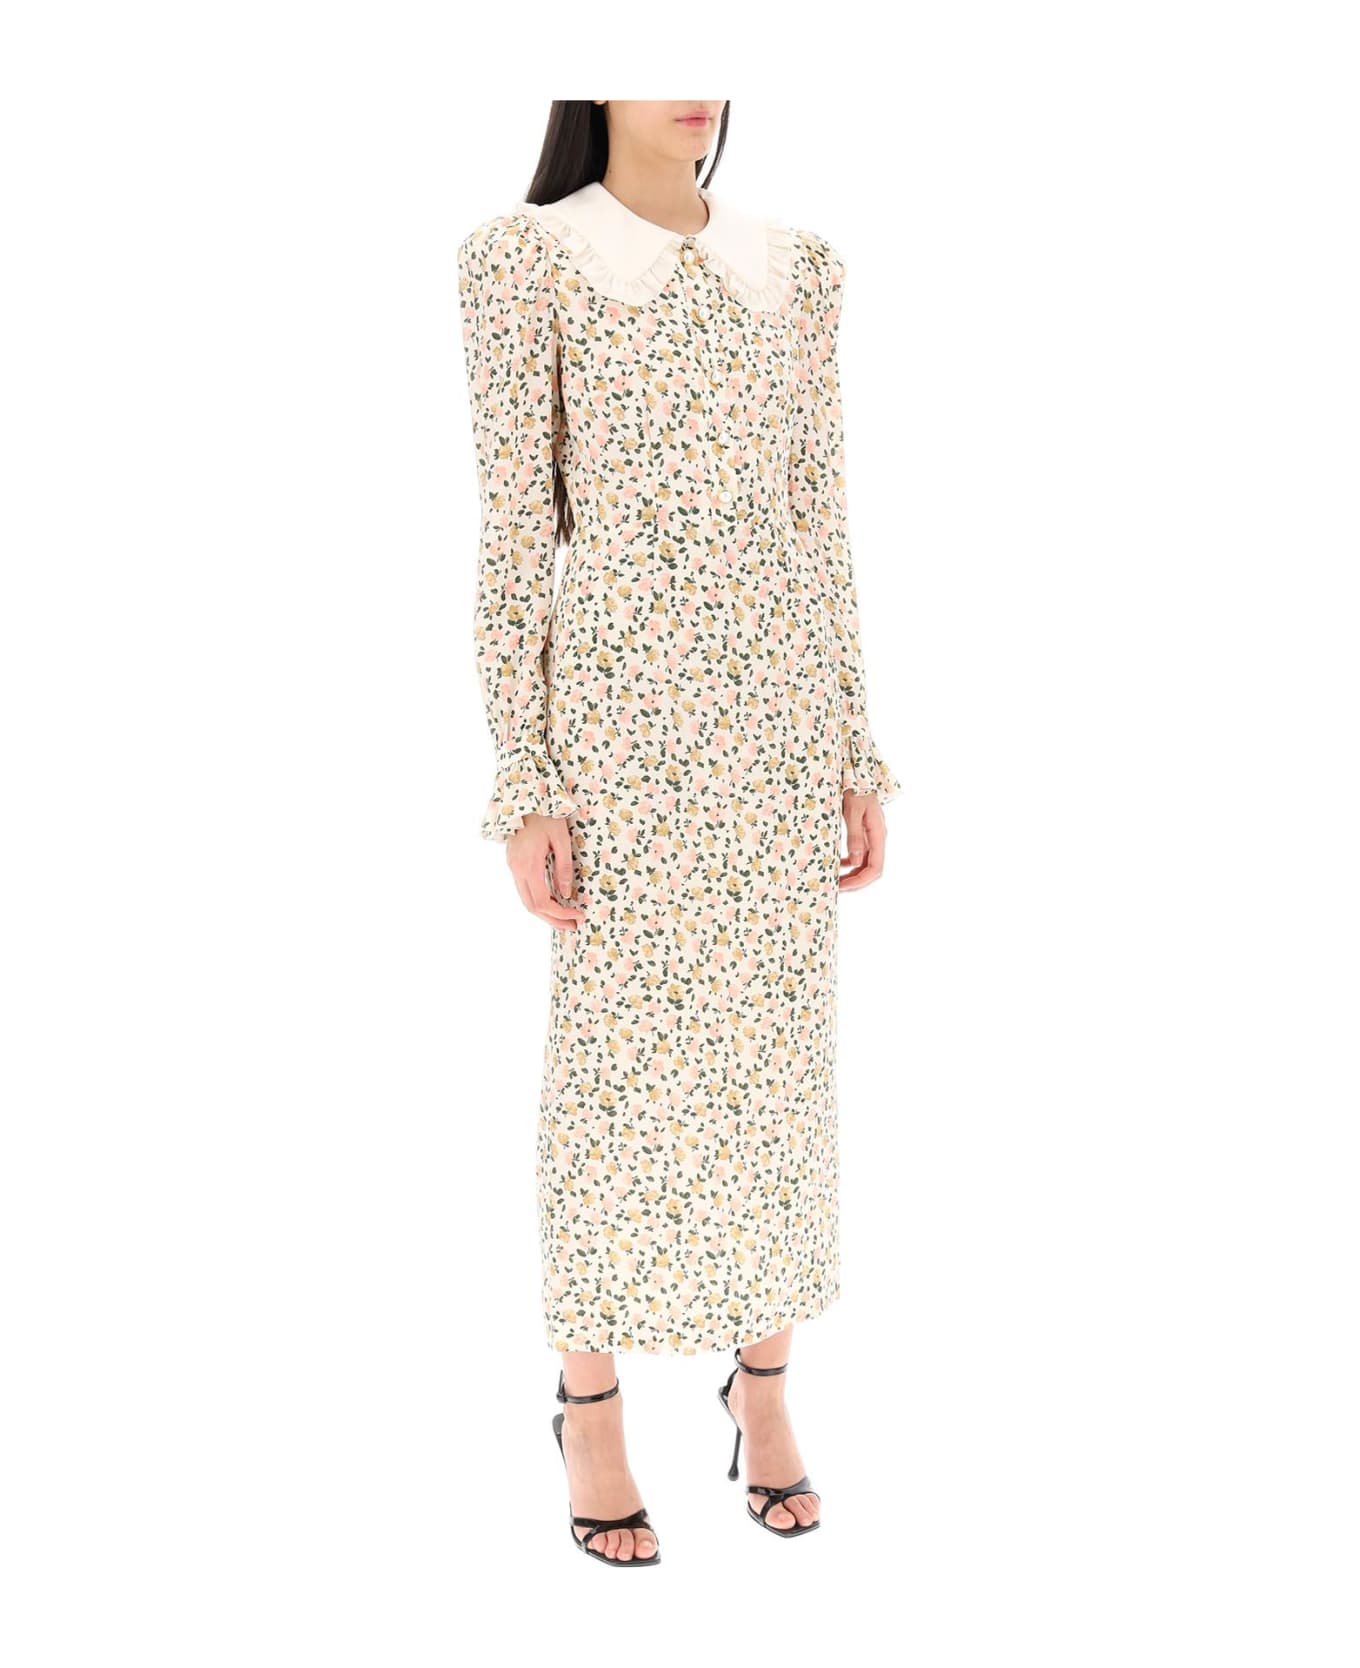 Alessandra Rich Floral Shirt Dress - PINK MULTI